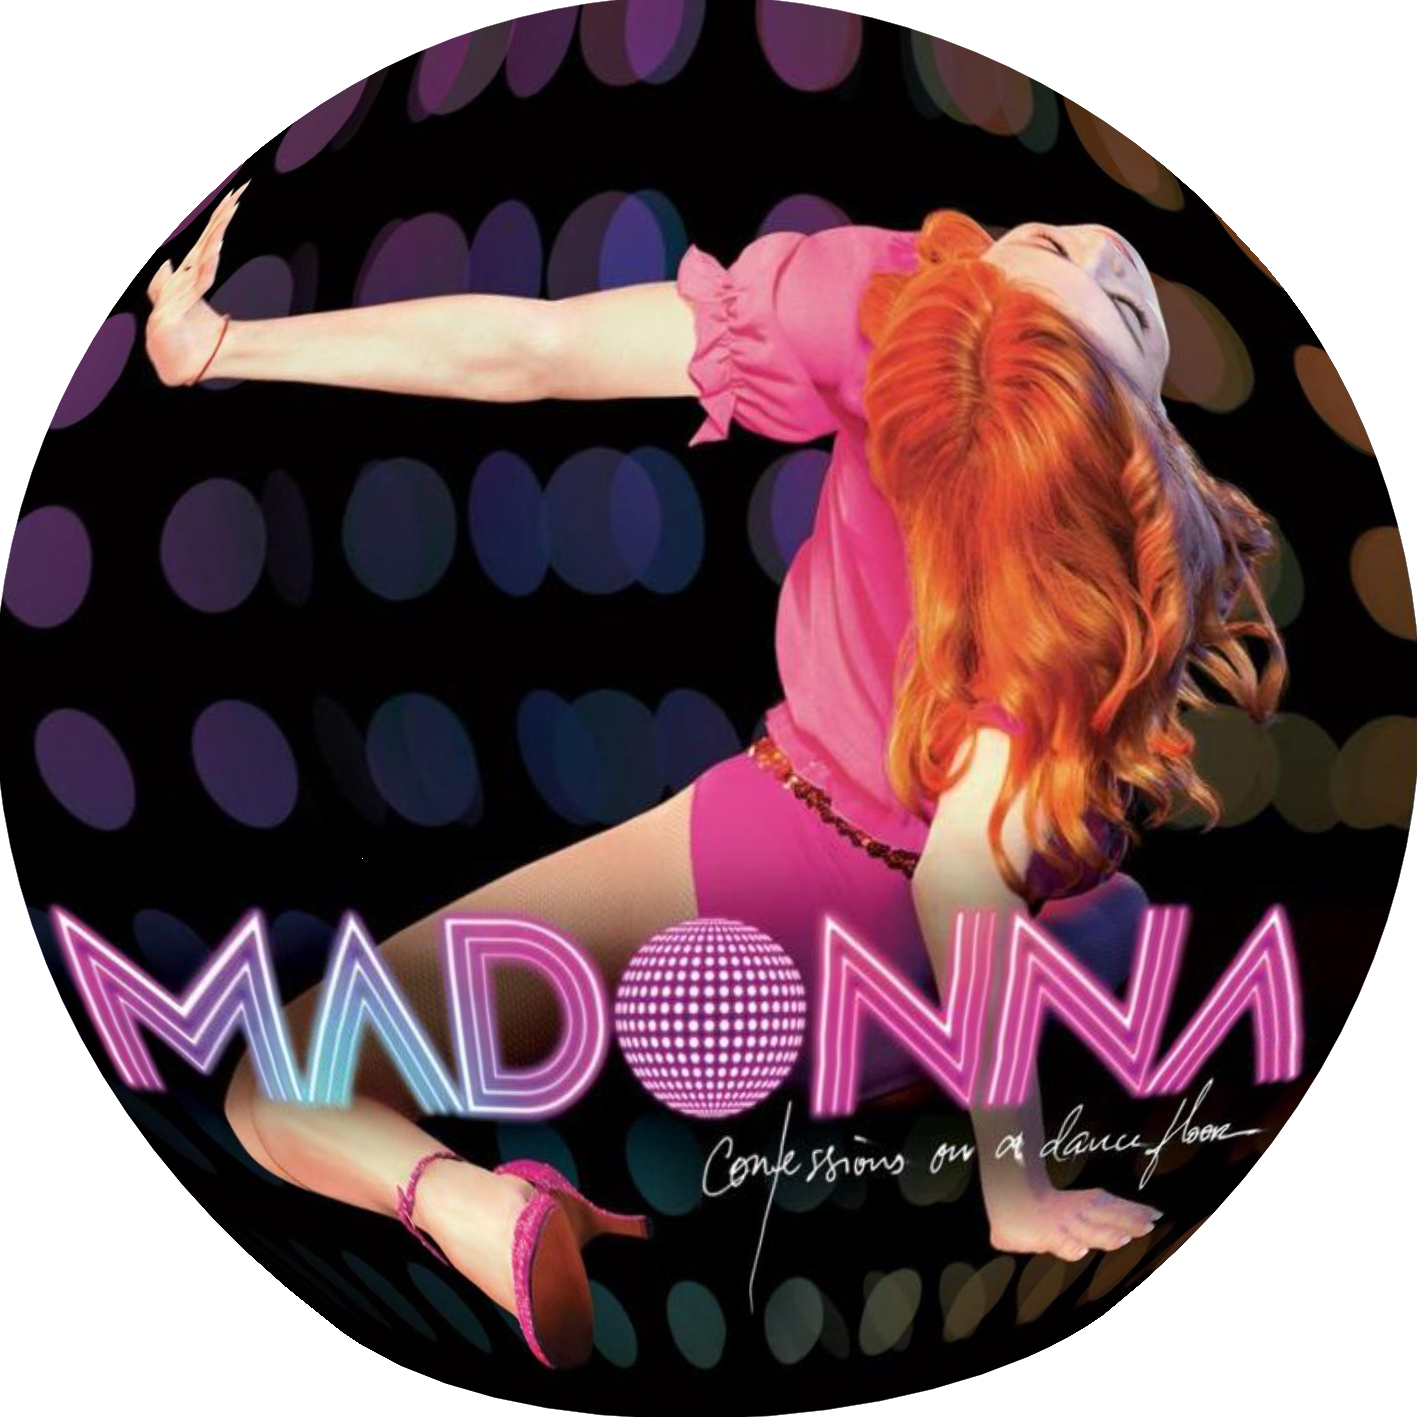 Newlightchild dancefloor. CD-Confessions-on-a-Dance-Floor-Мадонна. Мадонна Dance Floor Confessions. Confessions on a Dance Floor Мадонна. Диск винил Мадонна Confessions on a Dance Floor.